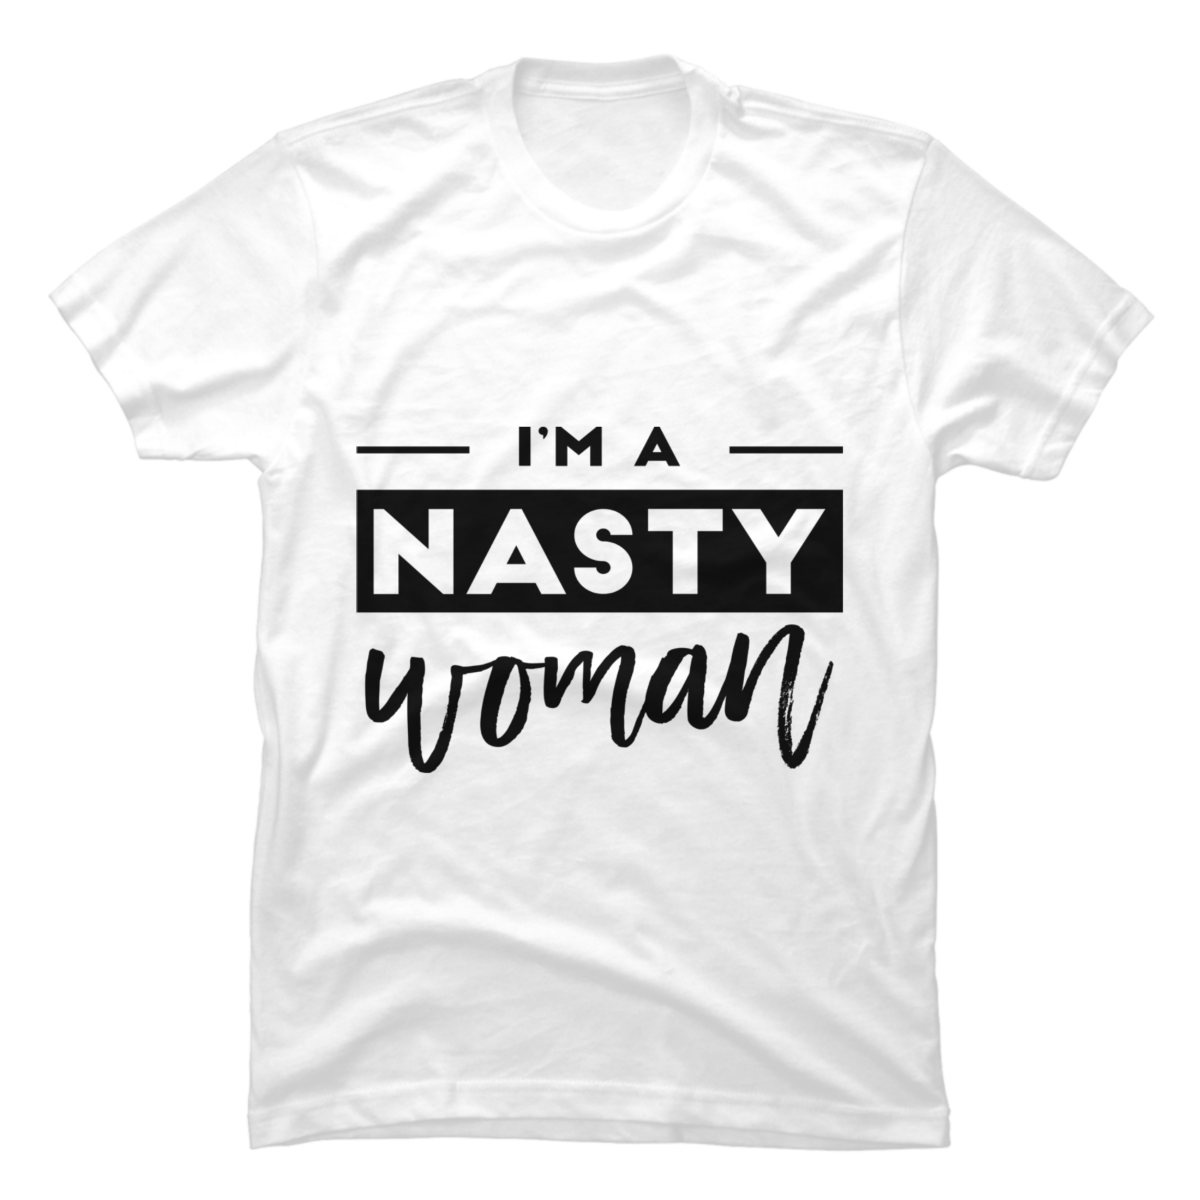 buy nasty woman t shirt